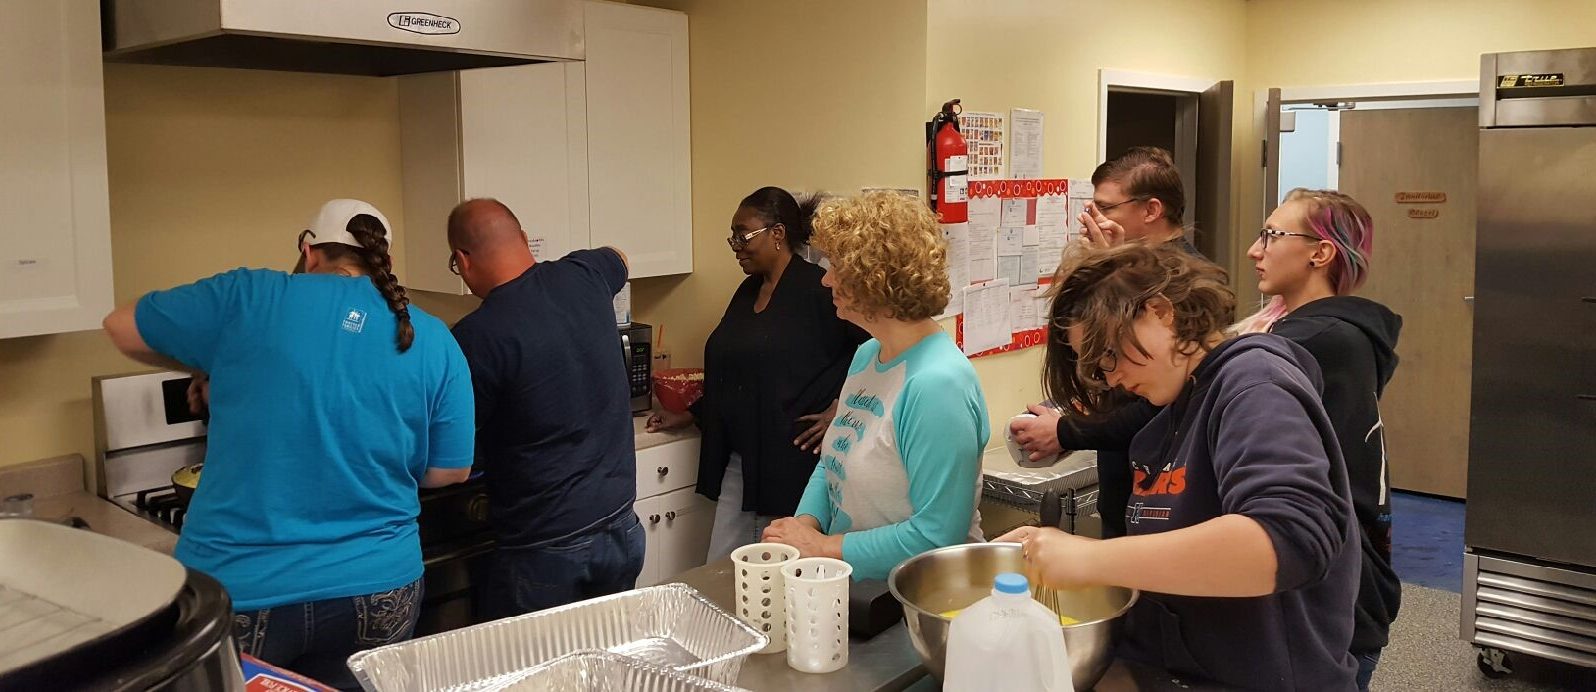 Providign breakfast to homeless in the Roseland community of Chicago